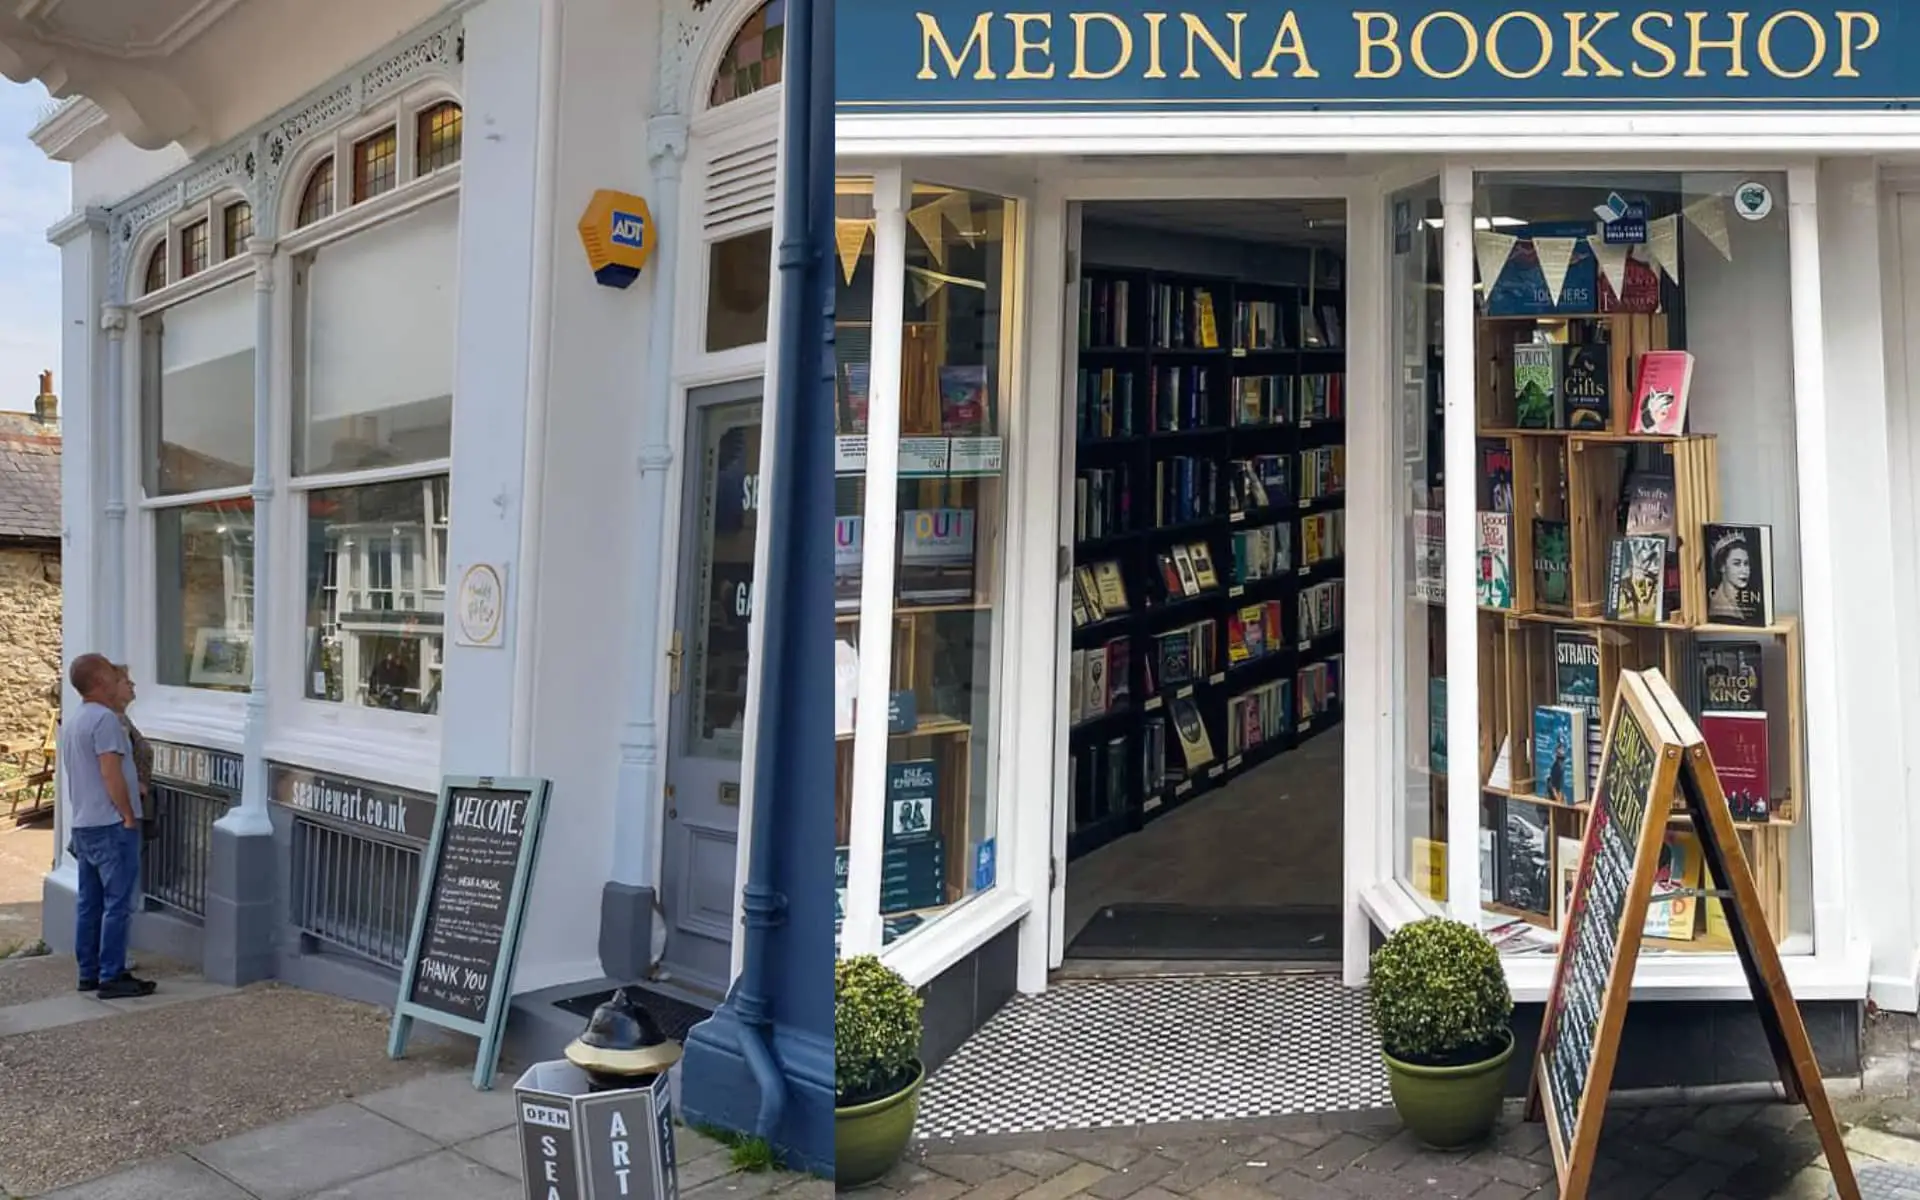 seaview gallery and medina bookshop